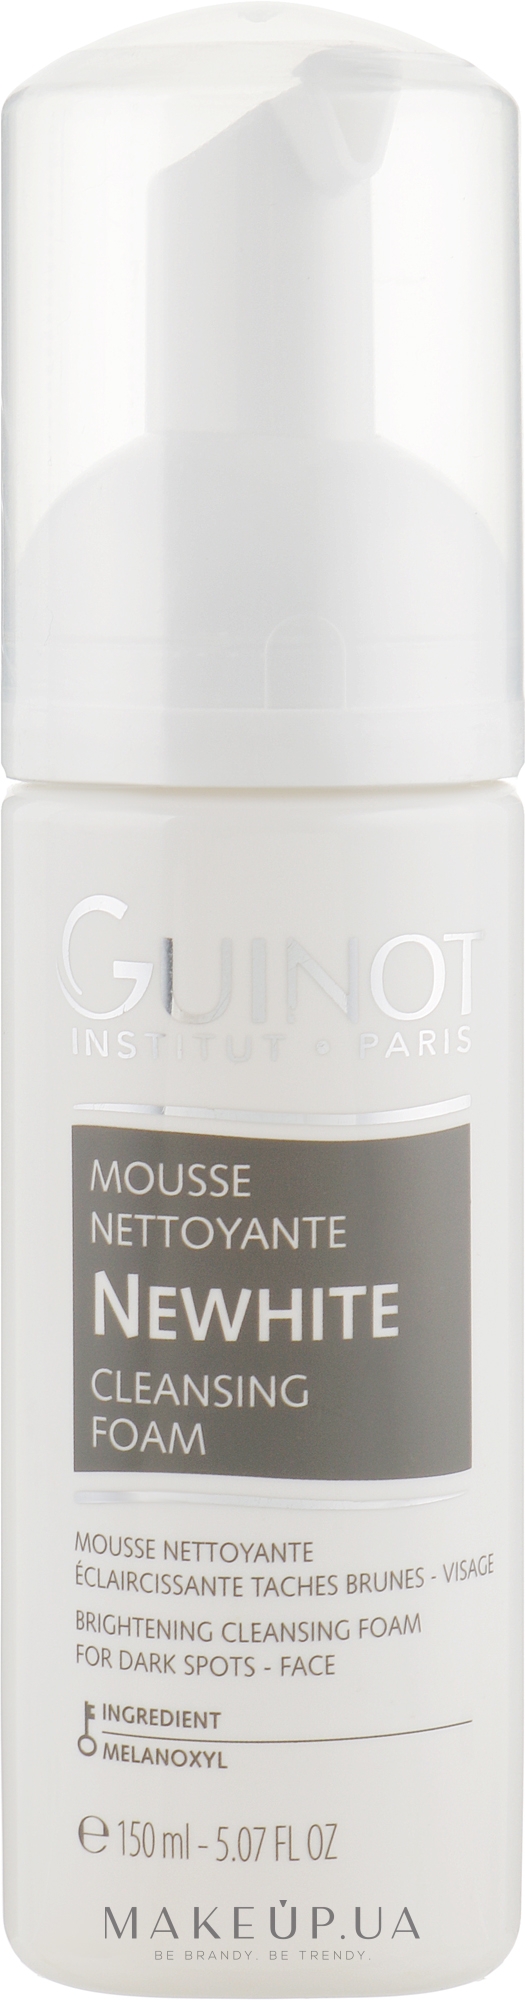 Осветляющий мусс для снятия макияжа - Guinot Newhite Perfect Brightening Cleansing Foam — фото 150ml